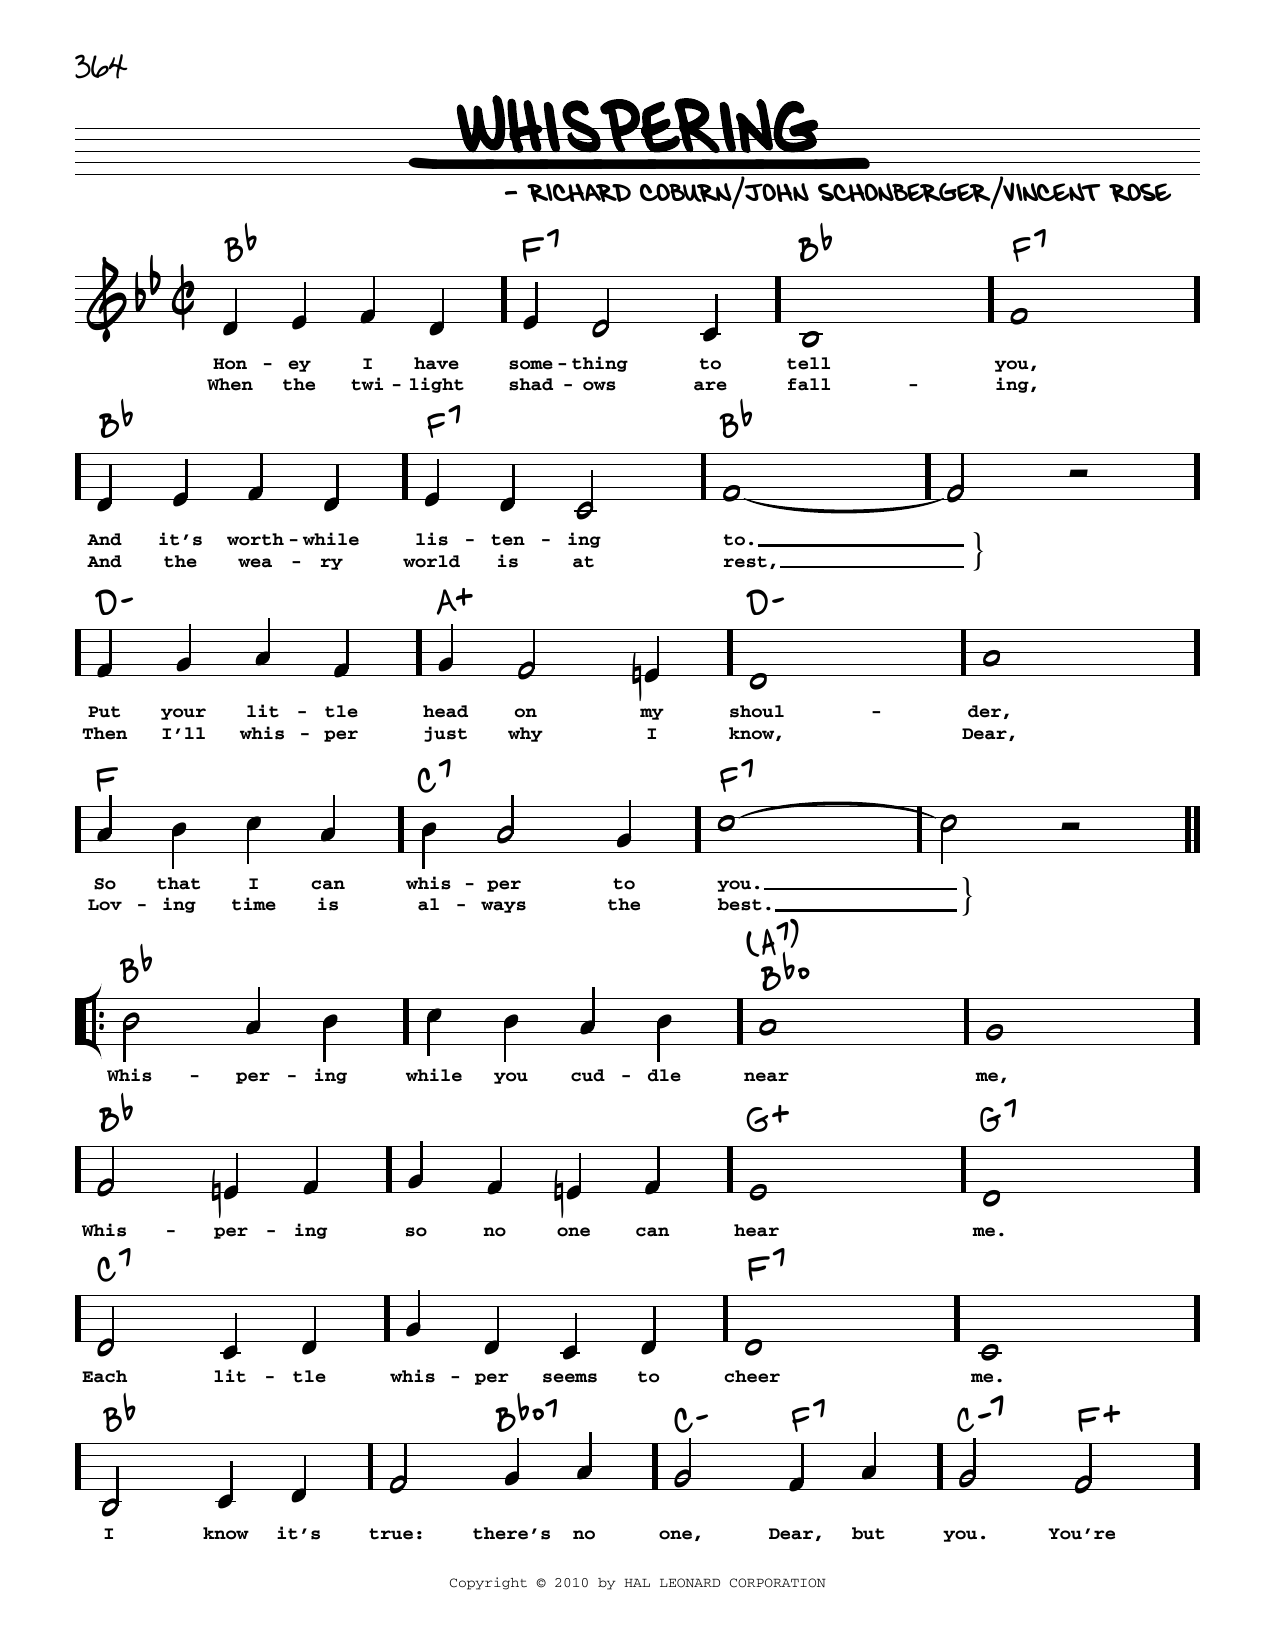 John Schonberger Whispering (arr. Robert Rawlins) Sheet Music Notes & Chords for Real Book – Melody, Lyrics & Chords - Download or Print PDF